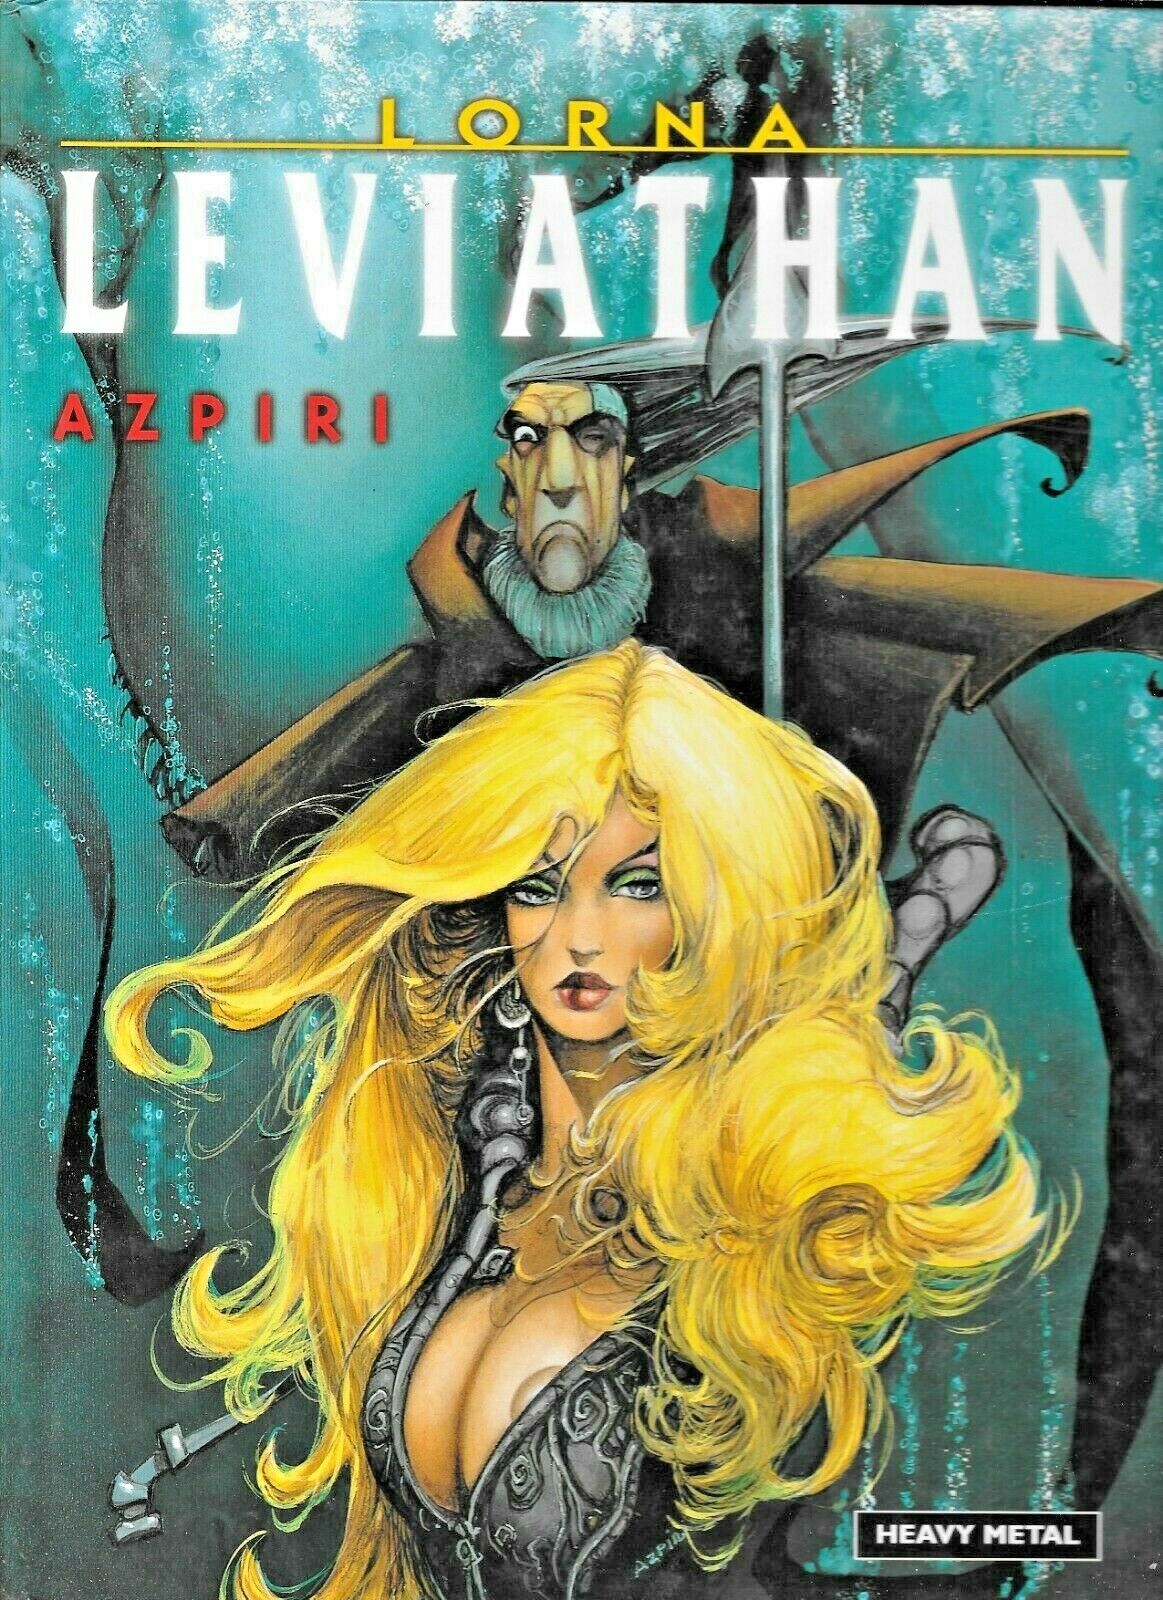 Lorna Leviathan A  Azpiri 2000 Heavy Metal Hardcover GN 60 pp FN/VF 1882931599 